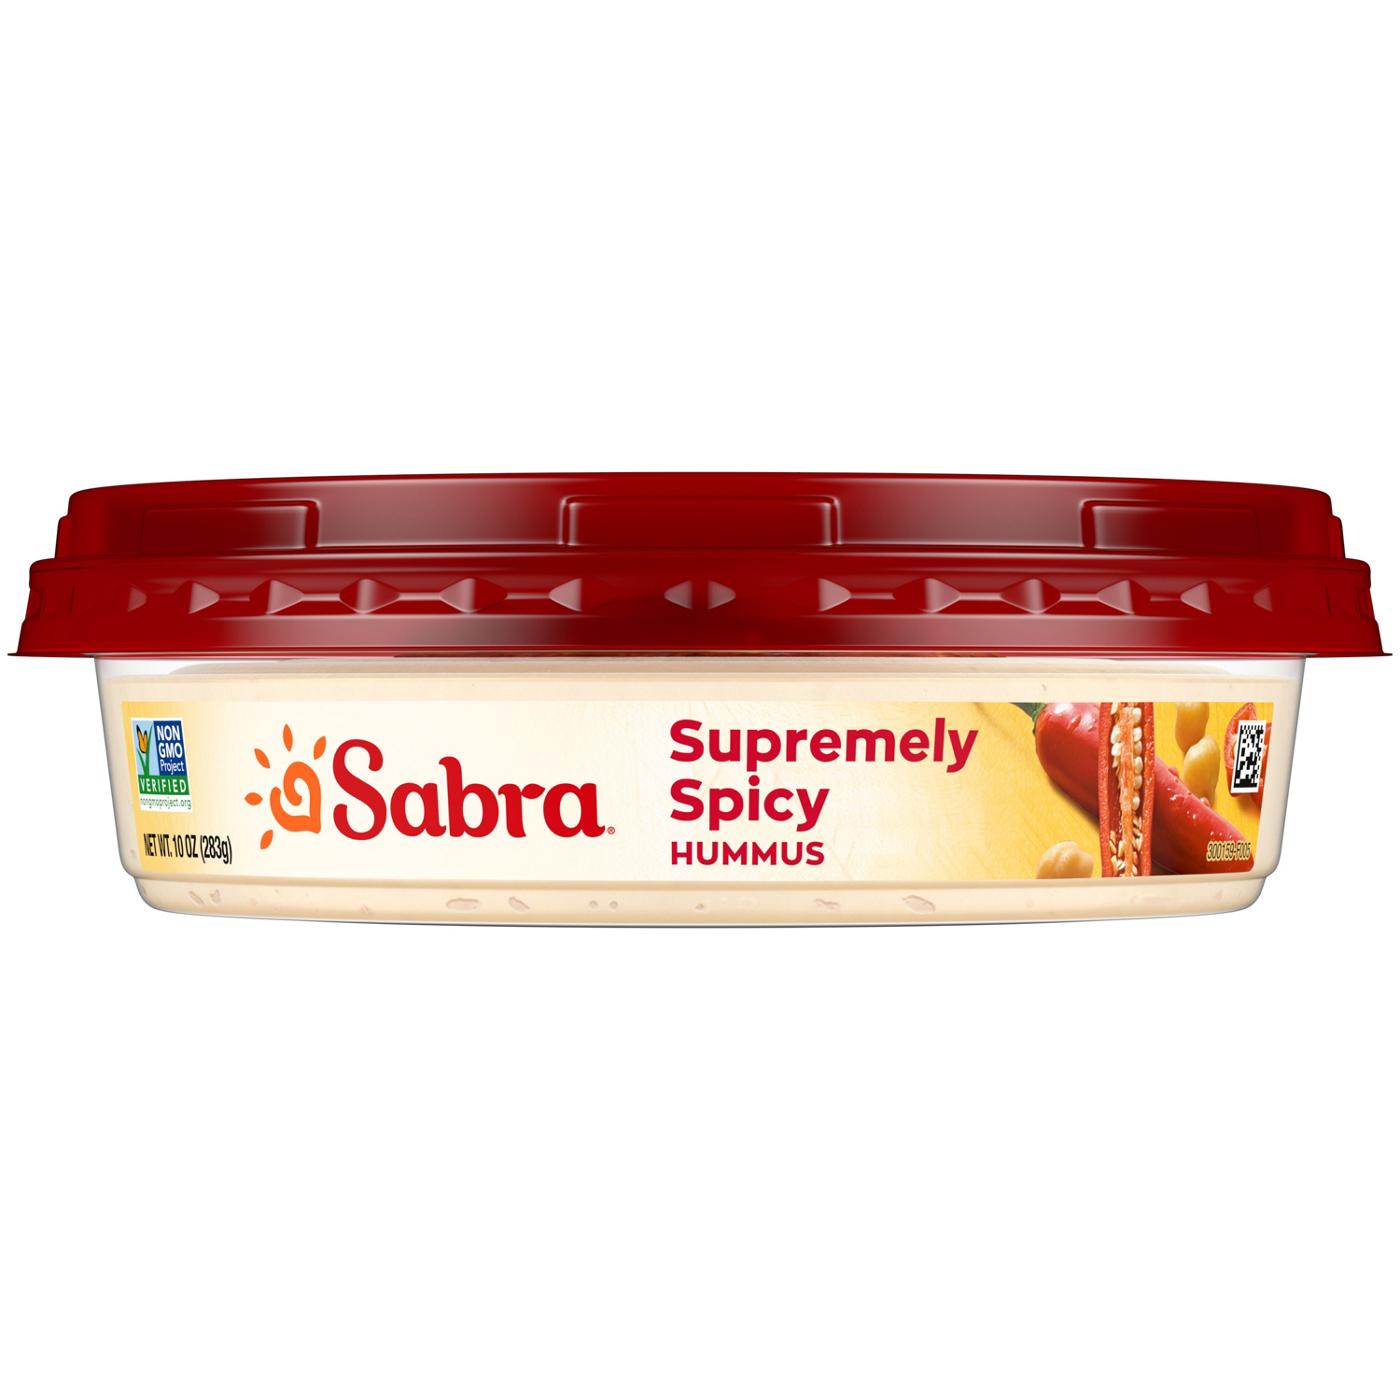 Sabra Supremely Spicy Hummus; image 3 of 3